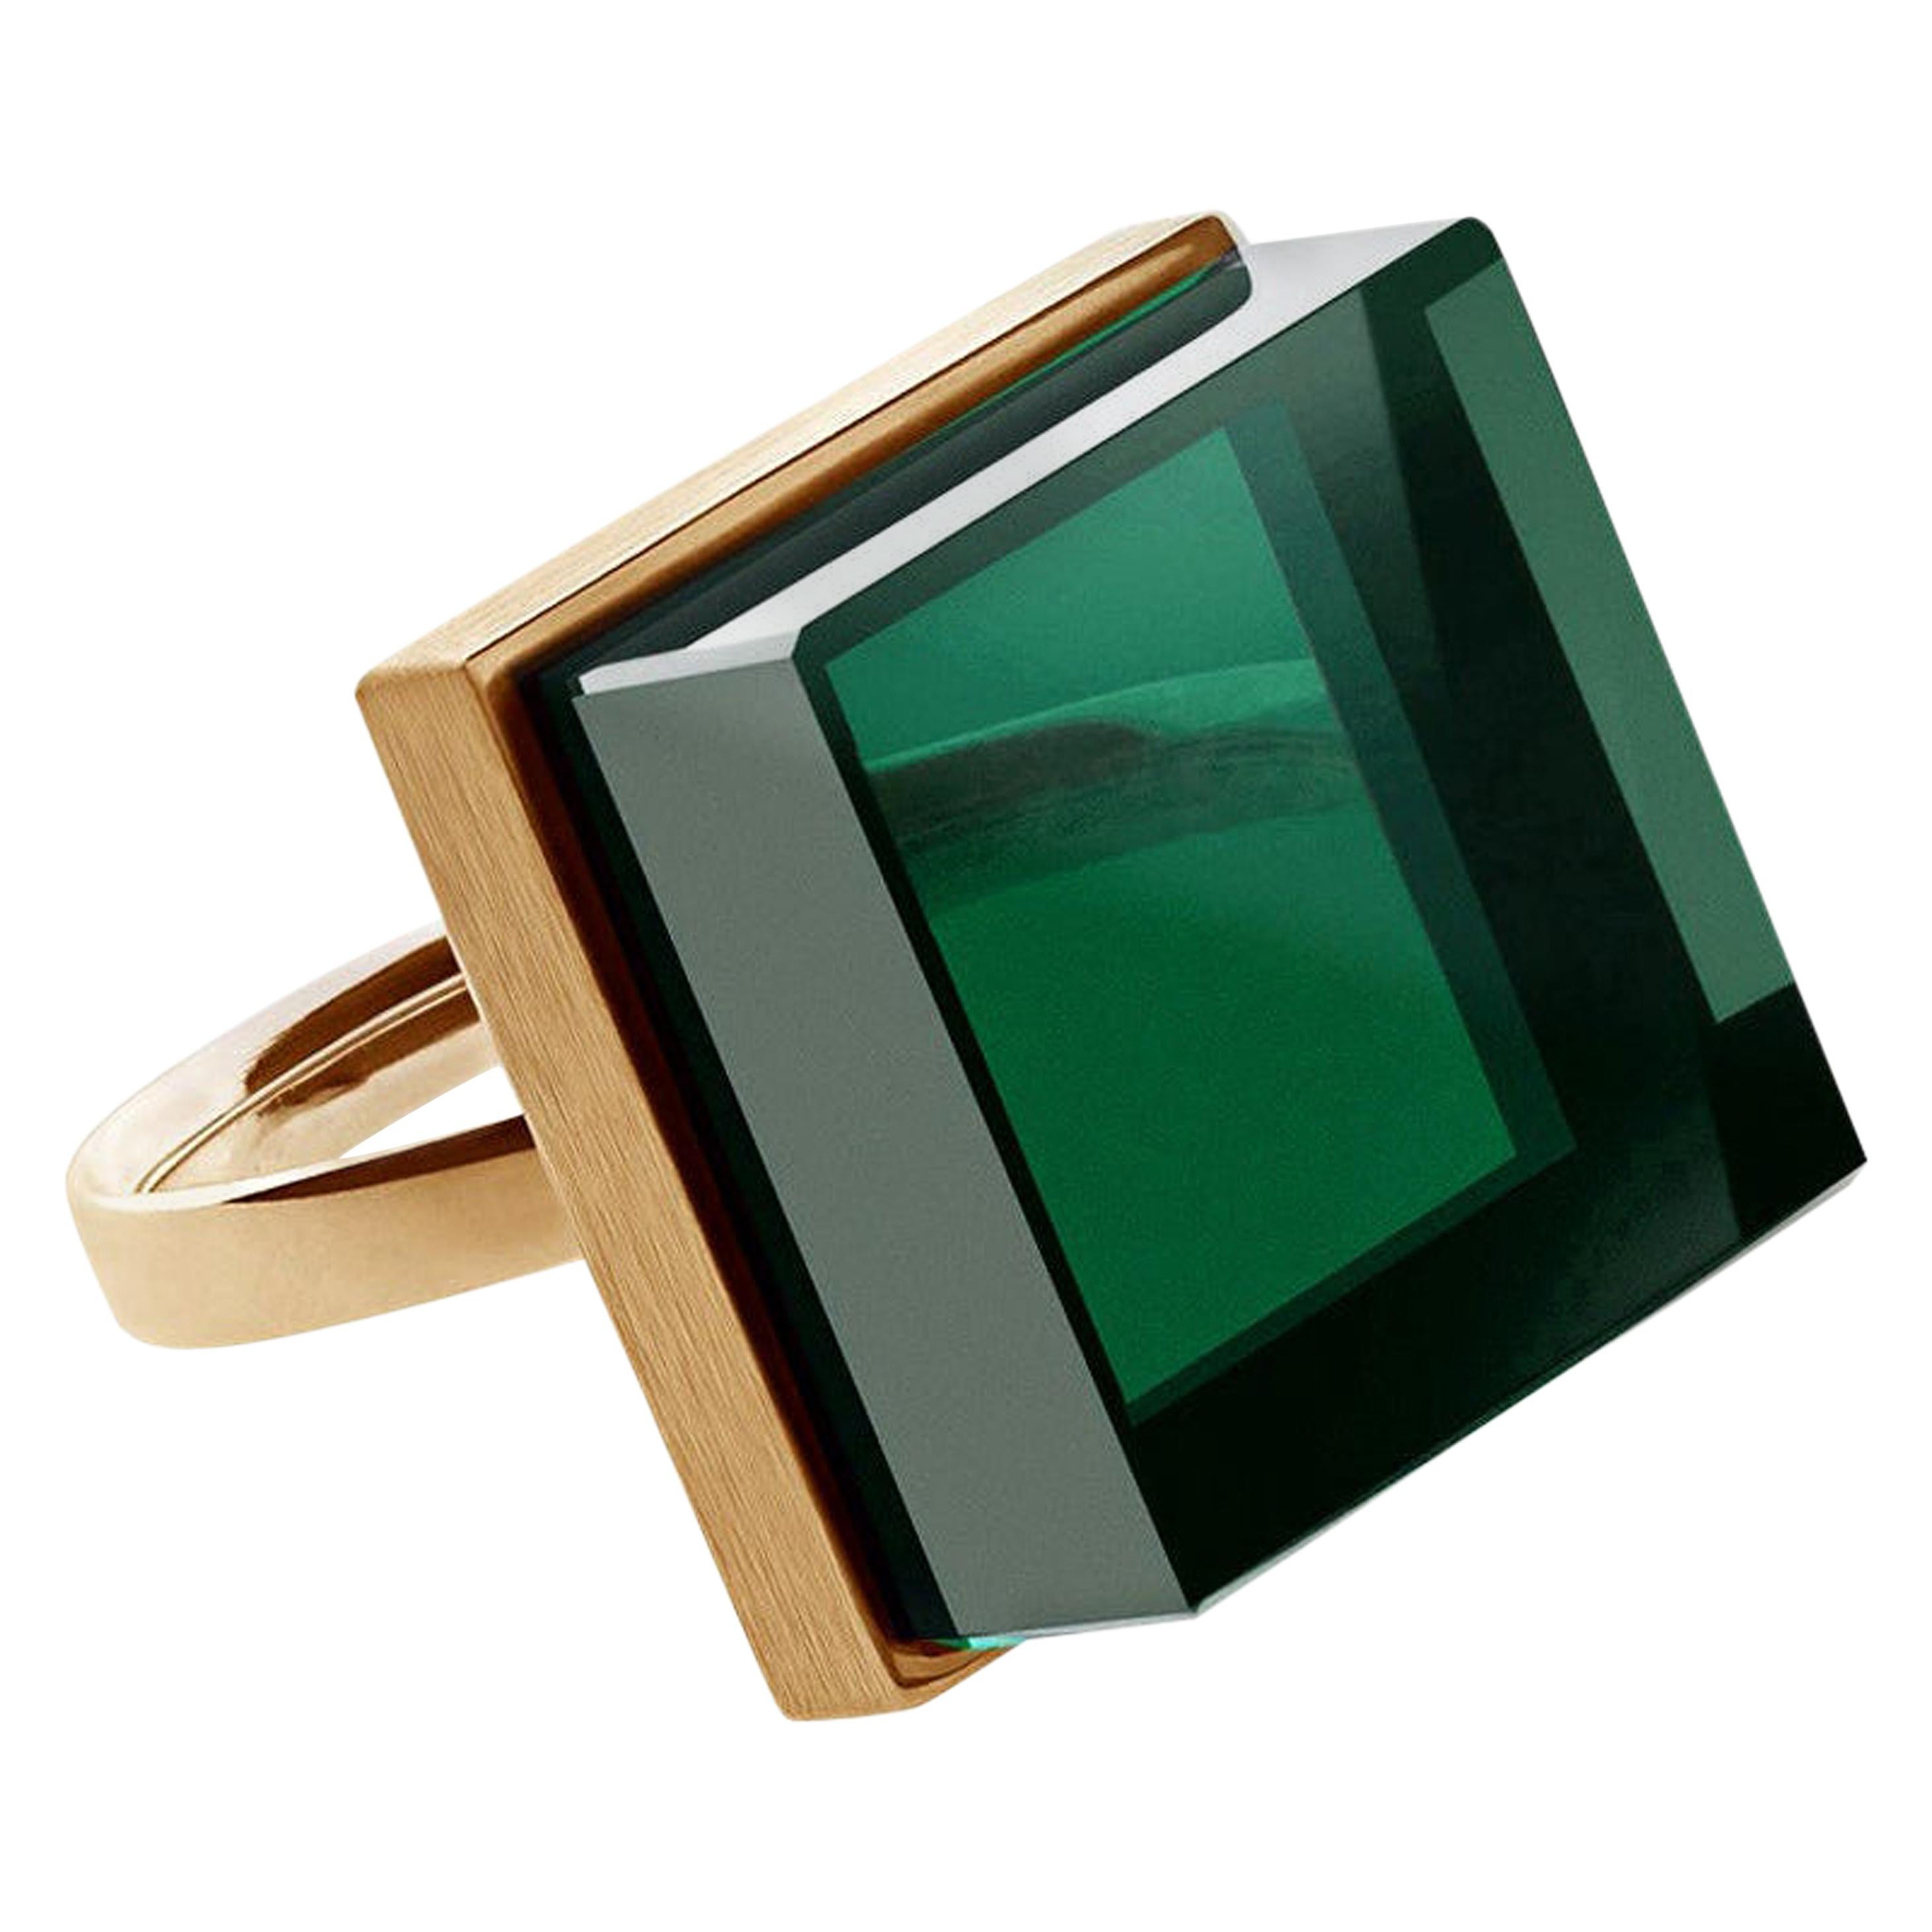 Featured in Vogue Fourteen Karat Rose Gold Art Deco Style Ring with Green Quartz